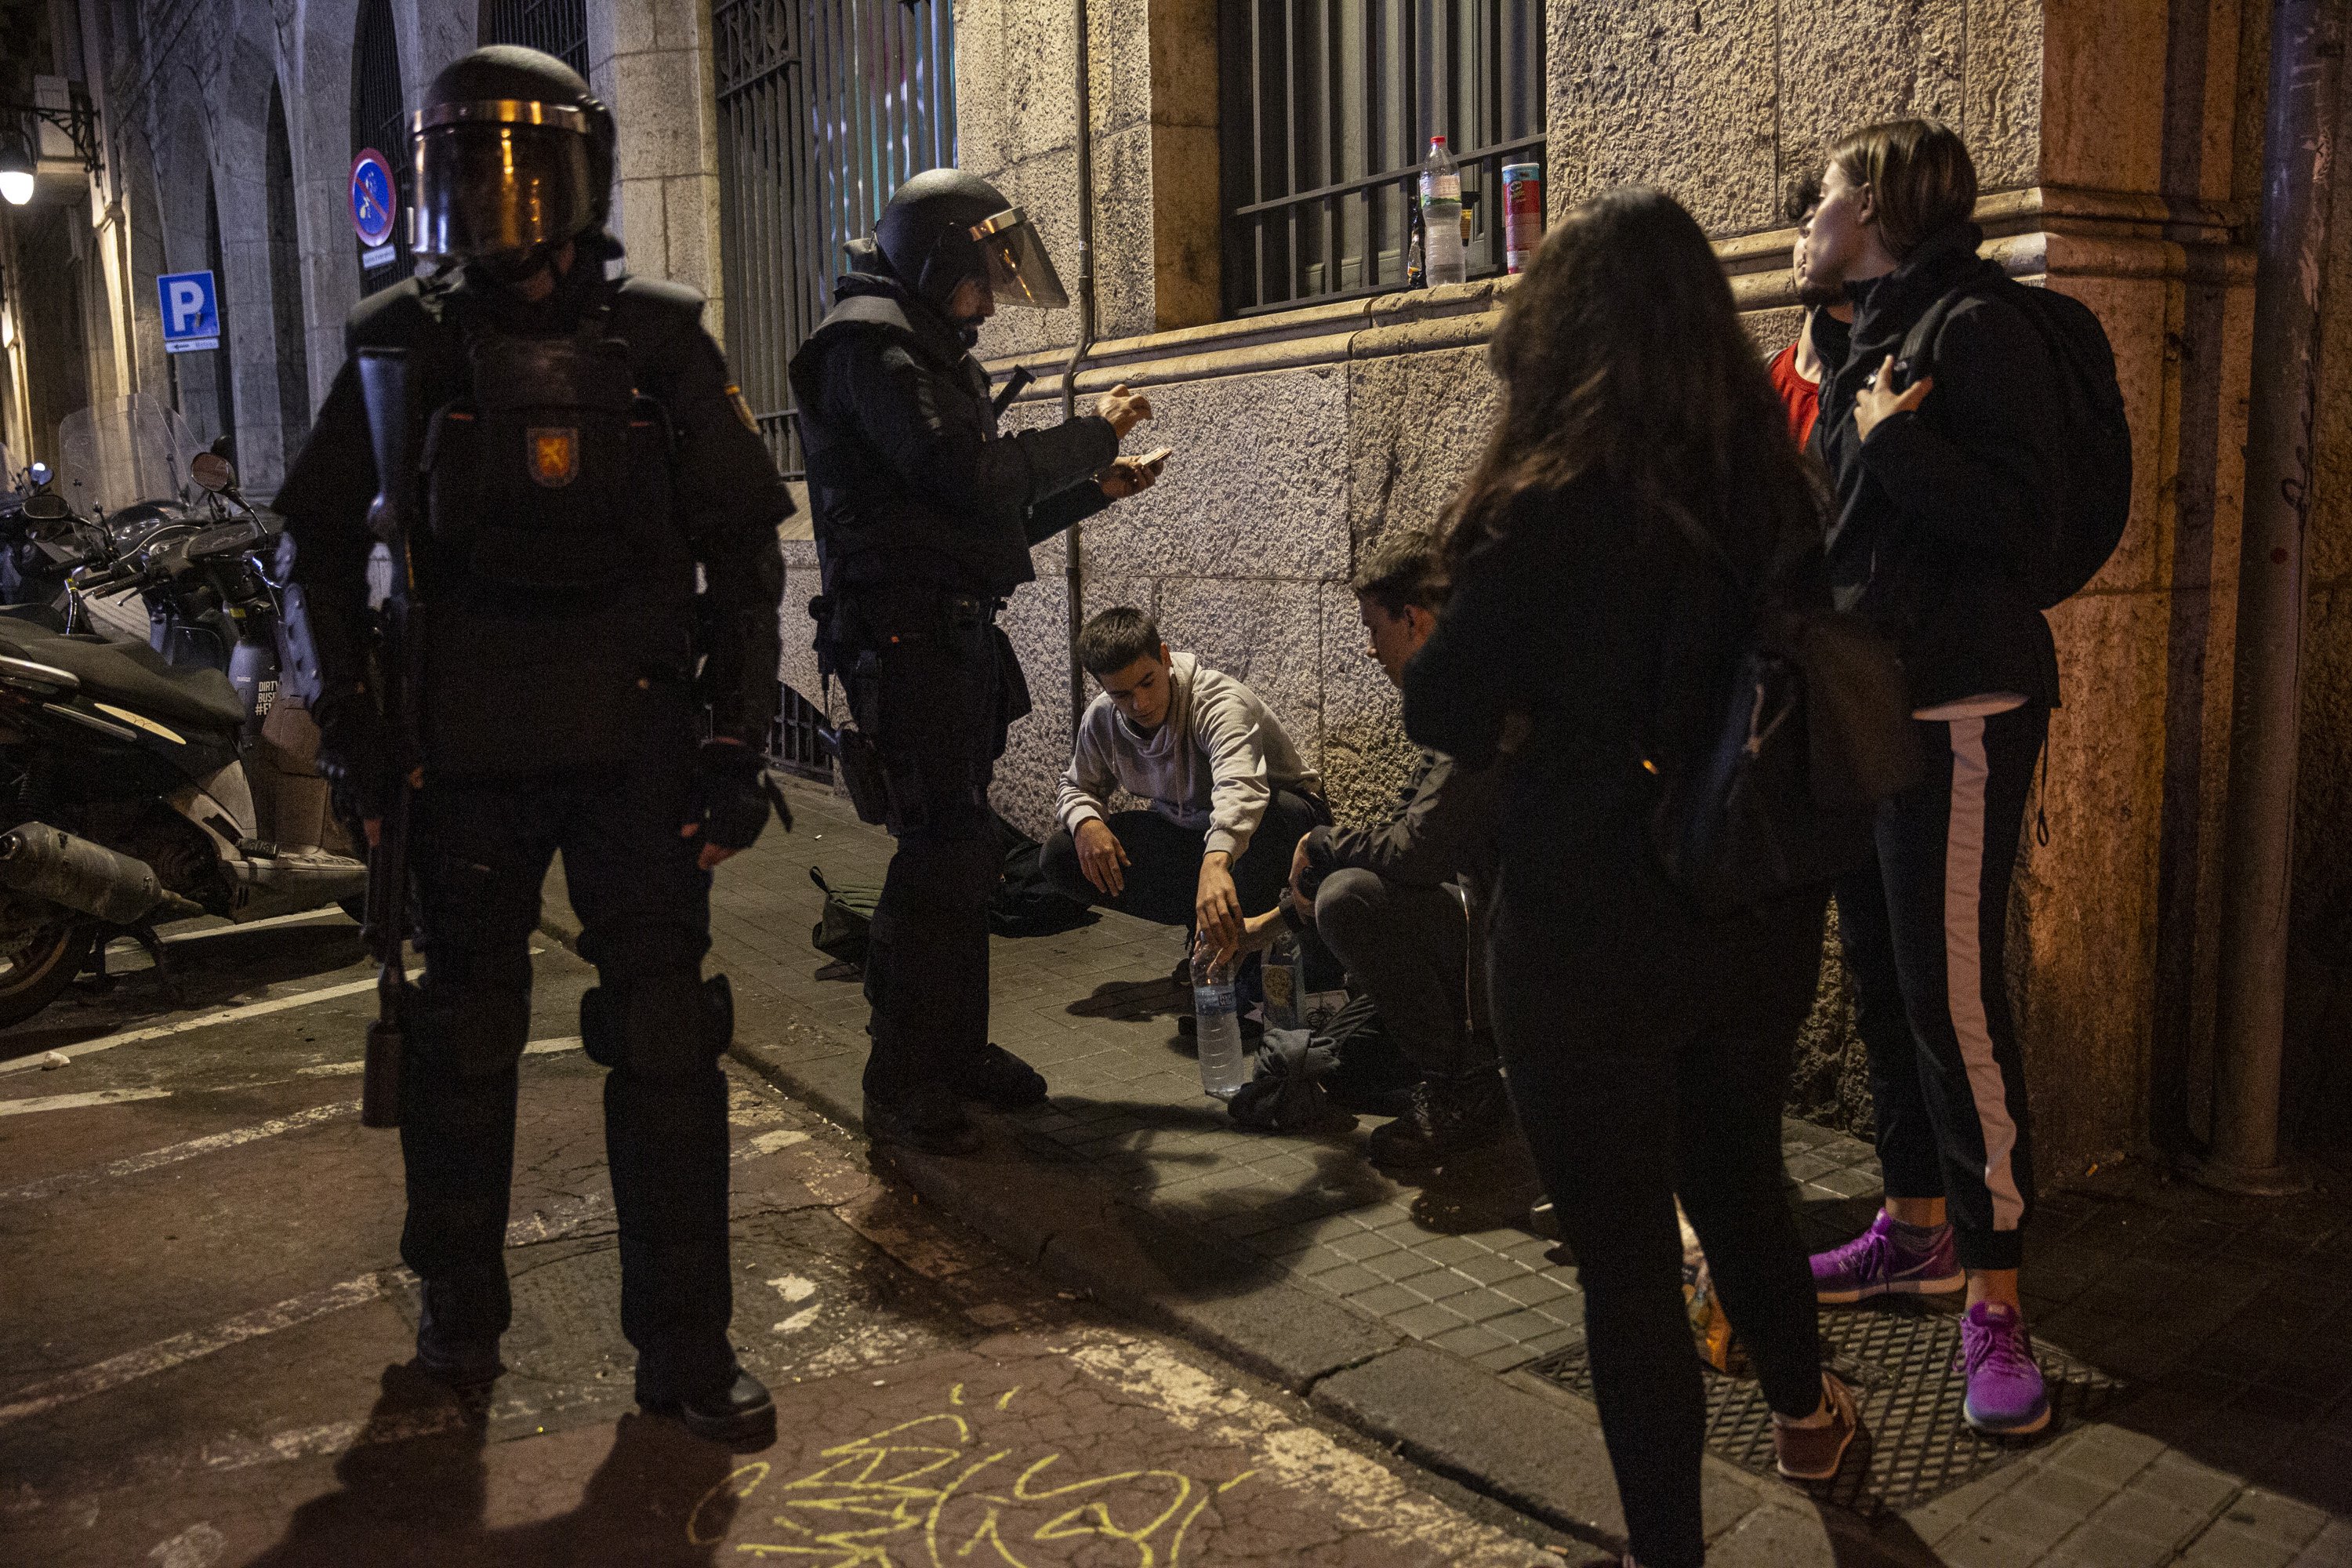 Balaclavas and billiard balls: the interrogations of those arrested in Catalonia